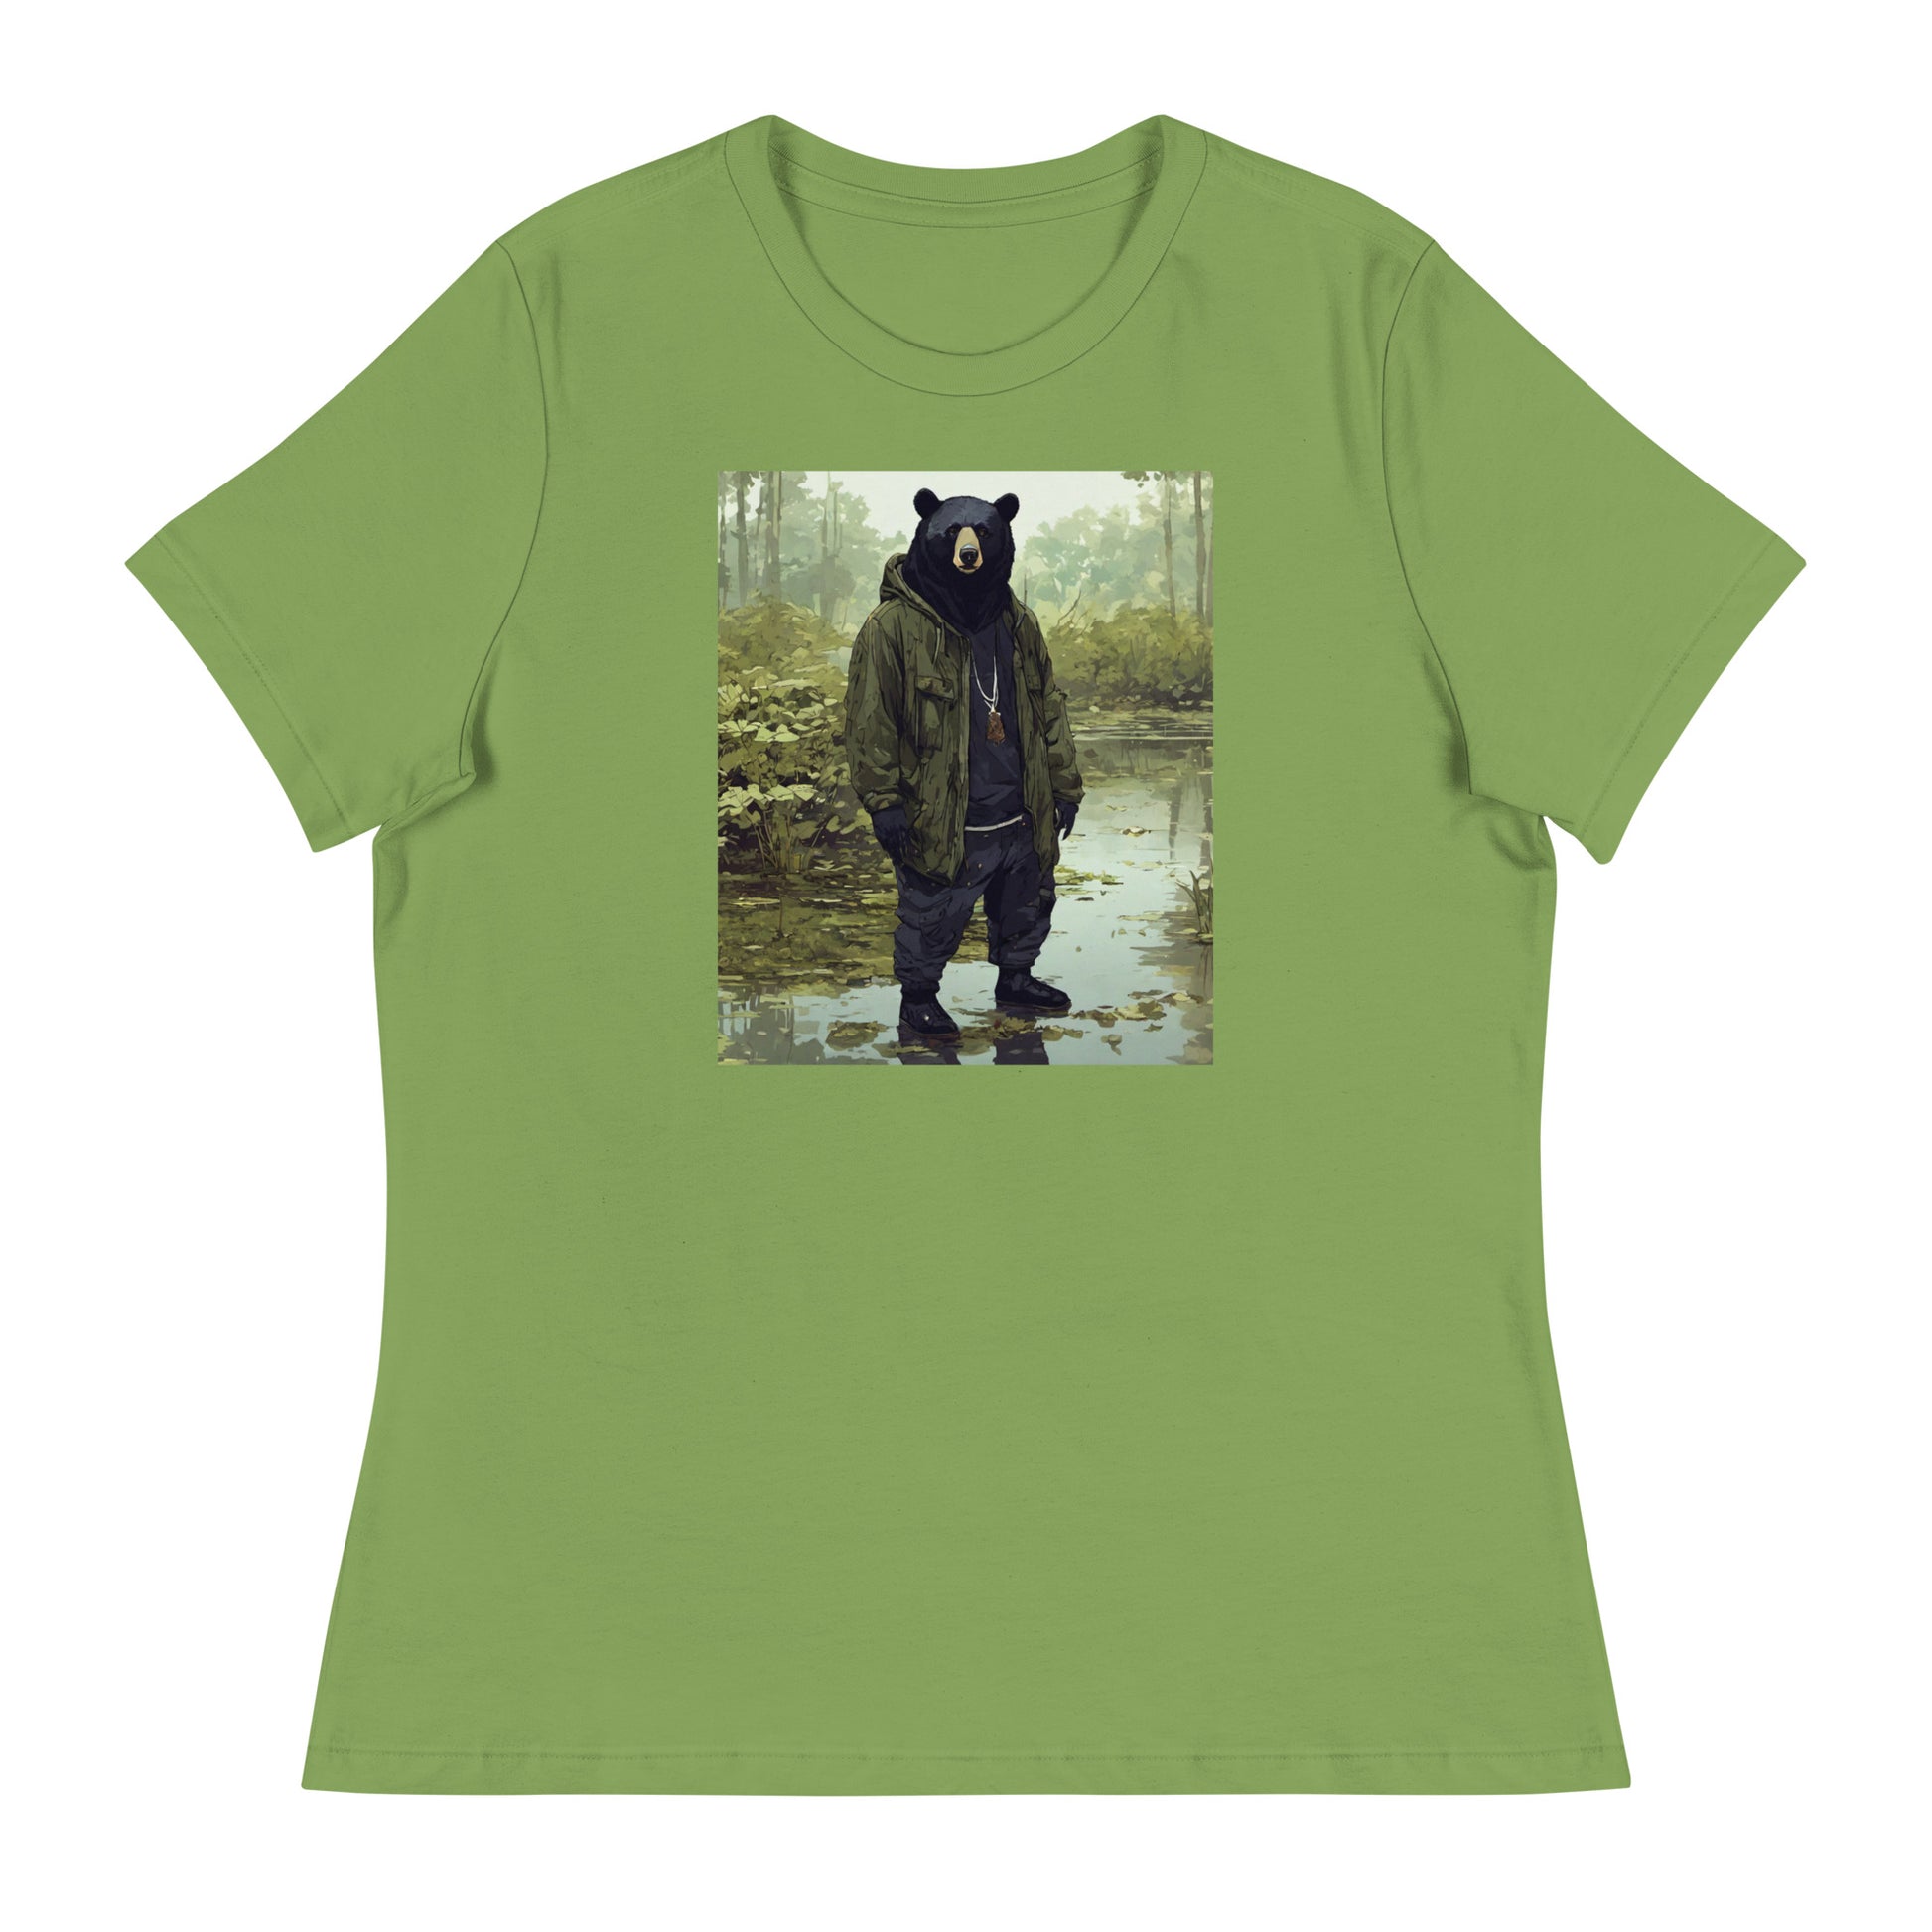 Stoic Black Bear Women's Graphic T-Shirt Leaf